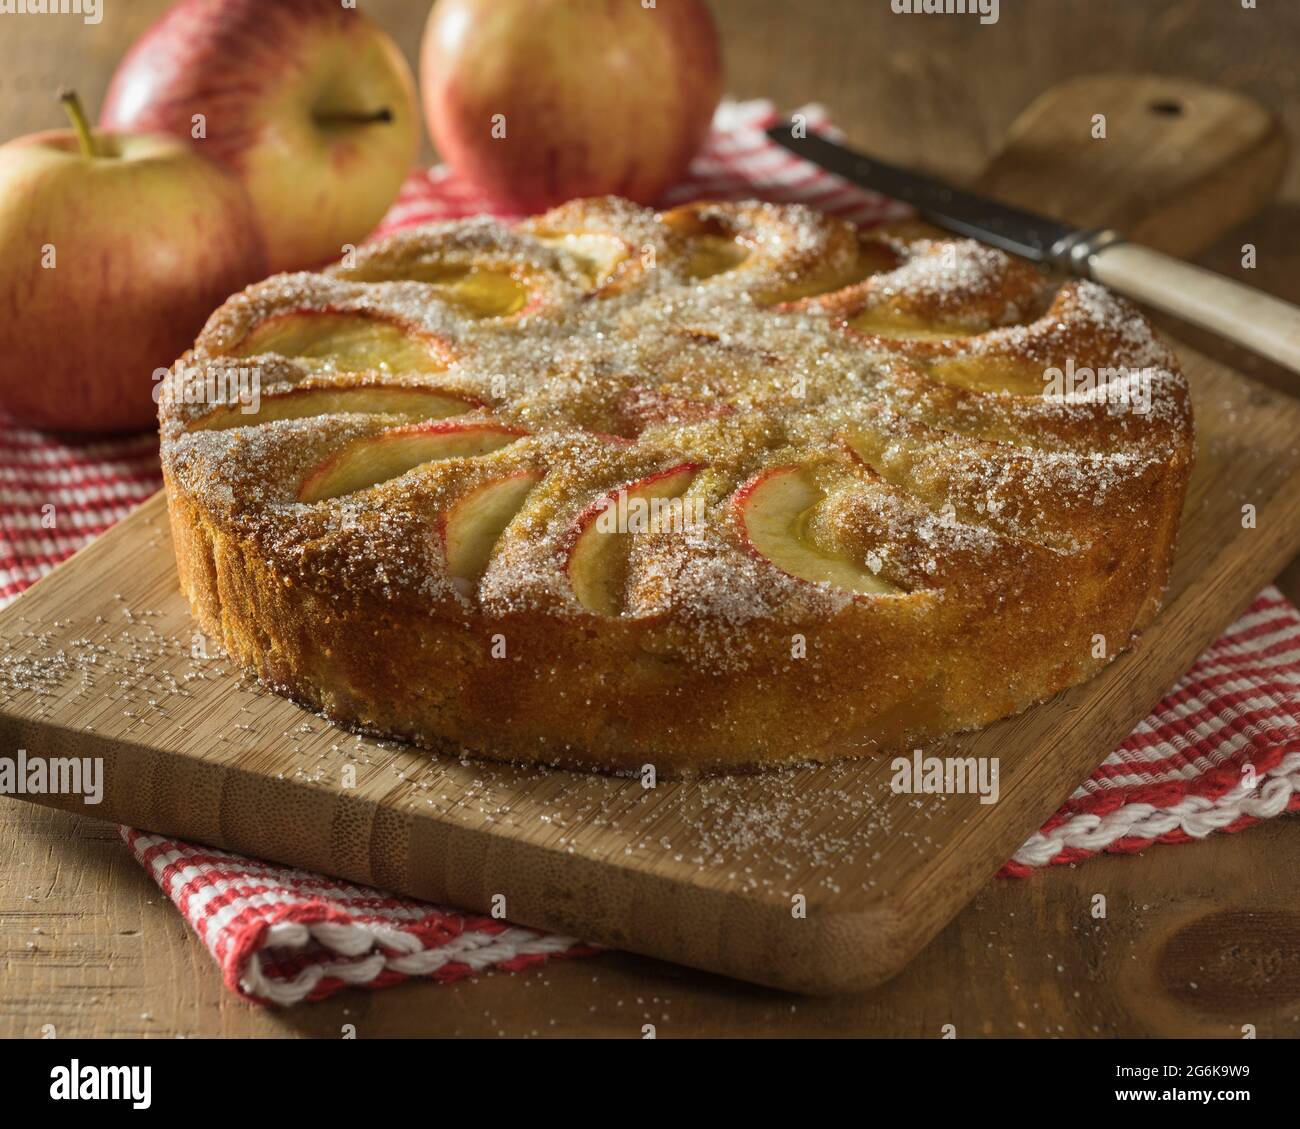 Gâteau fermière aux pommes. French apple cake. France Food Stock Photo